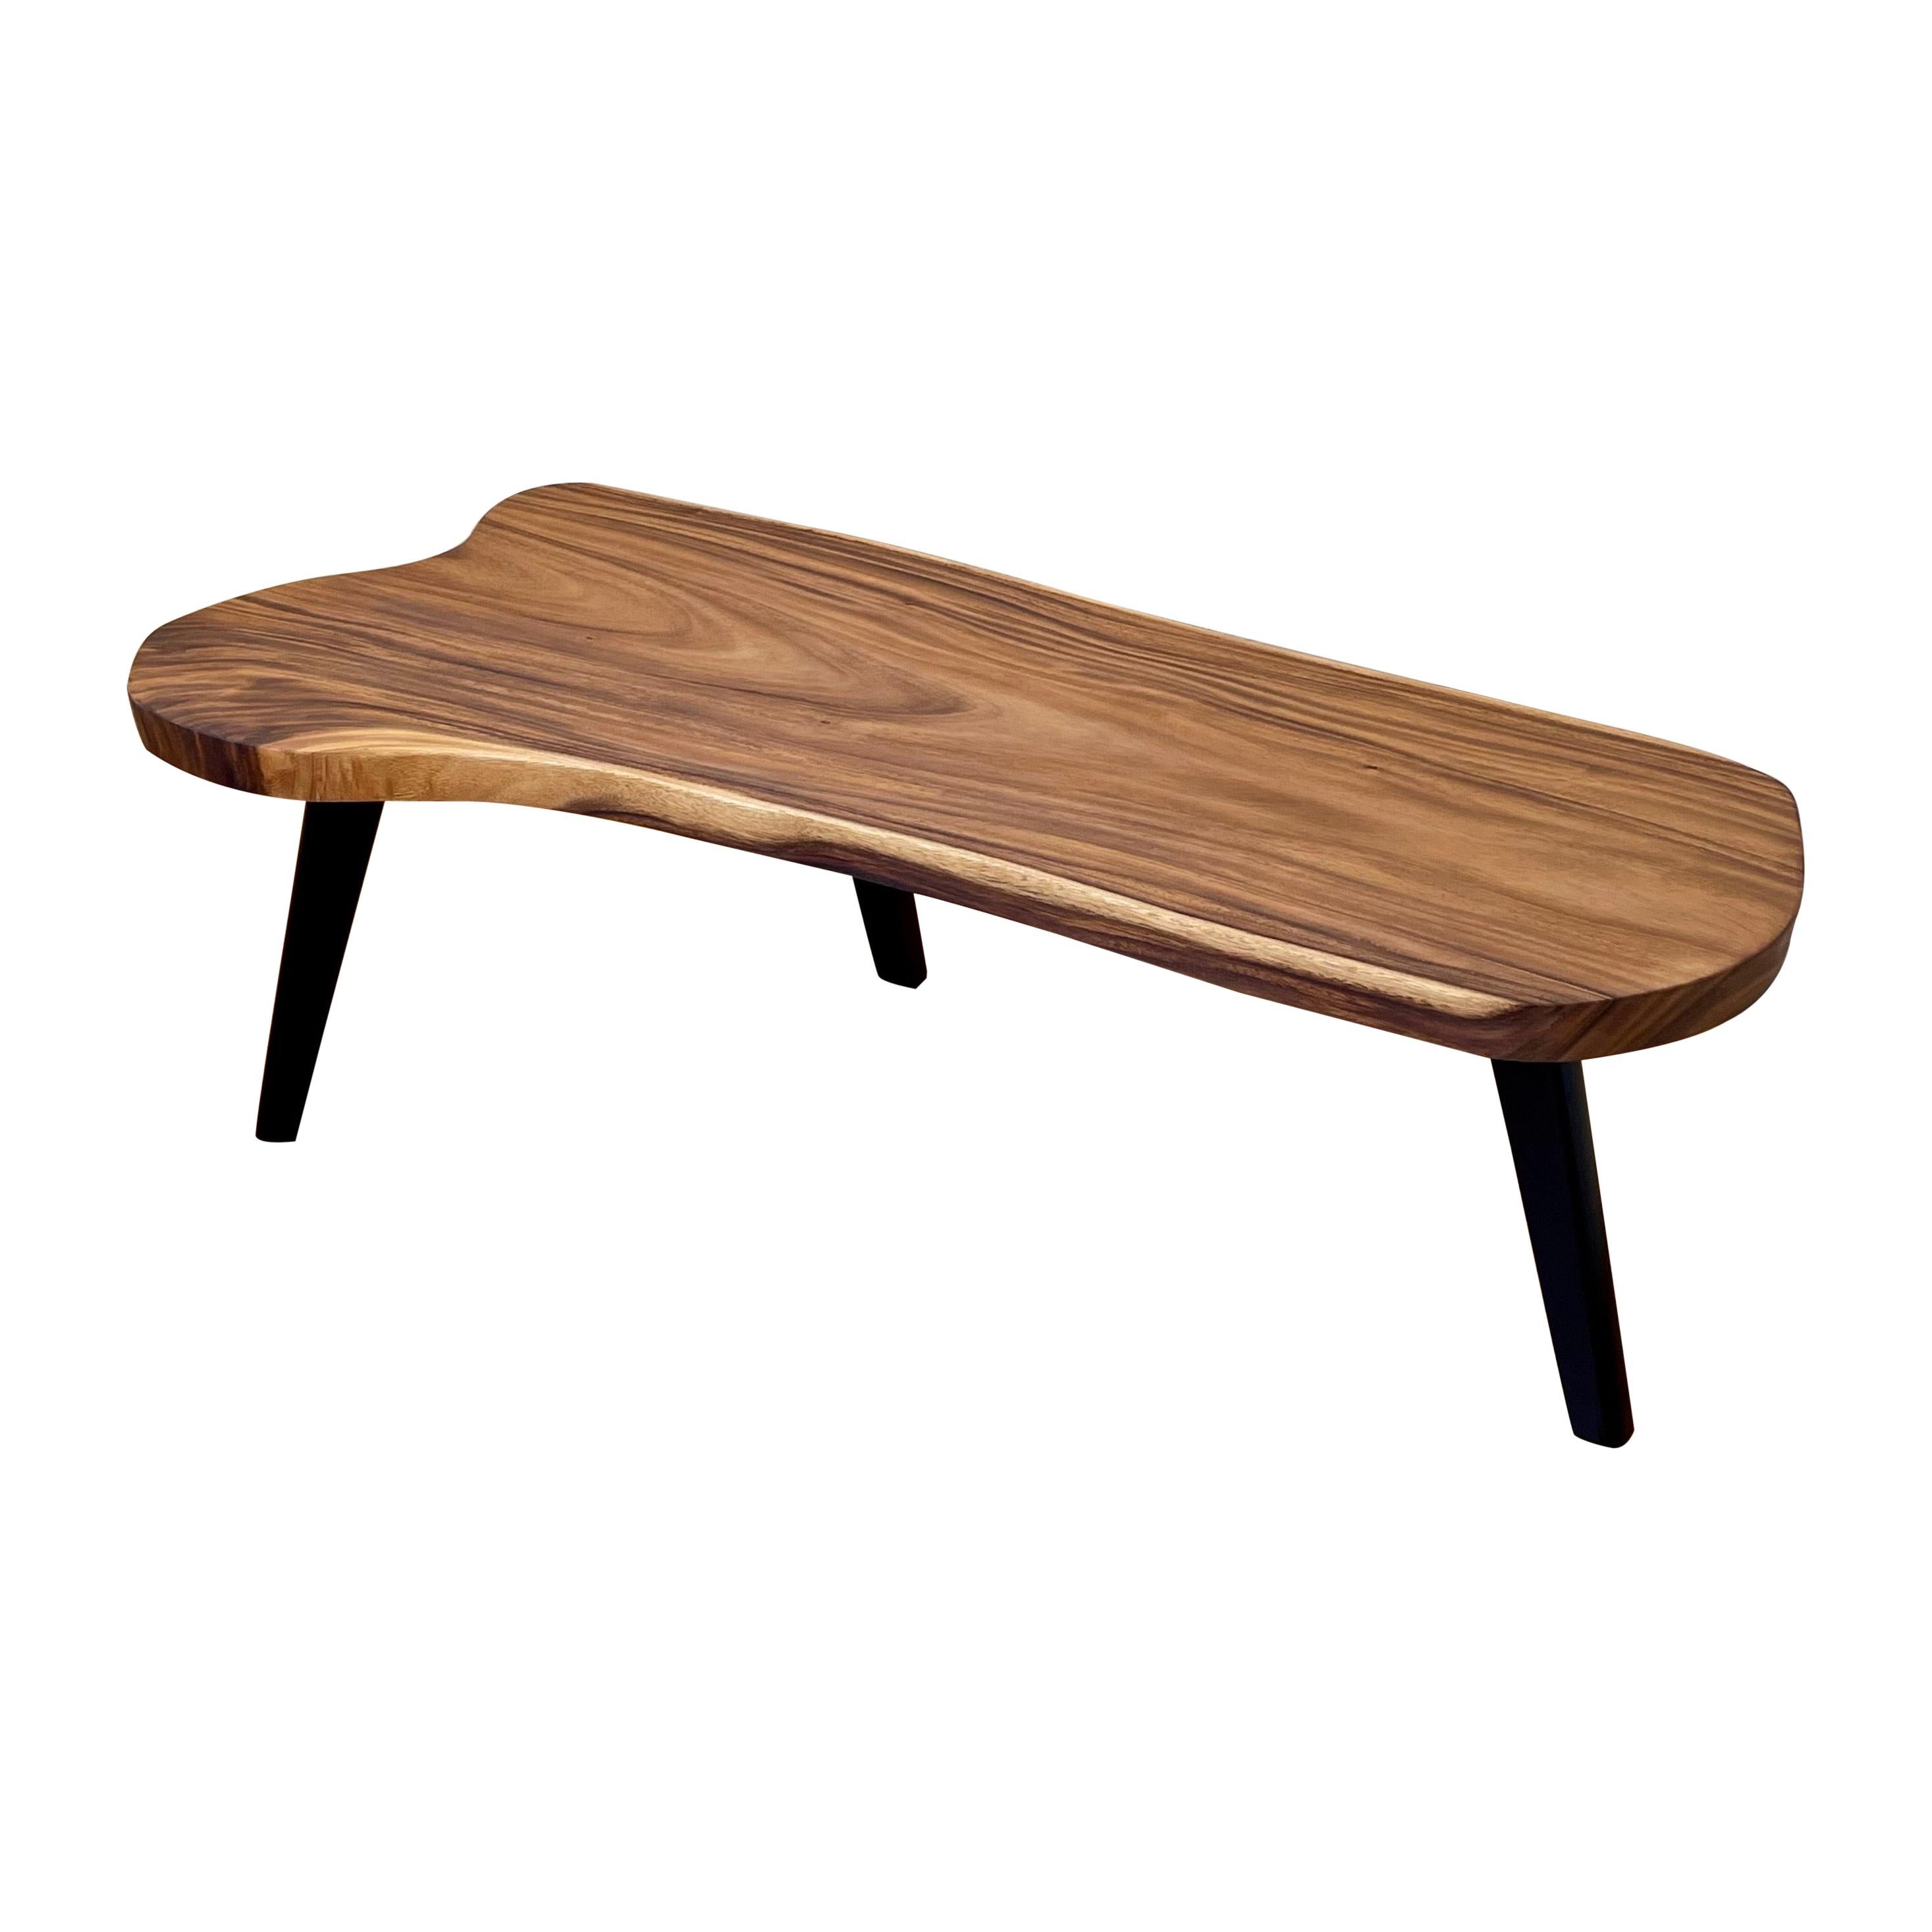 1960s Mid-Century American Freeform Solid Monkey Pod Wood Coffee Table